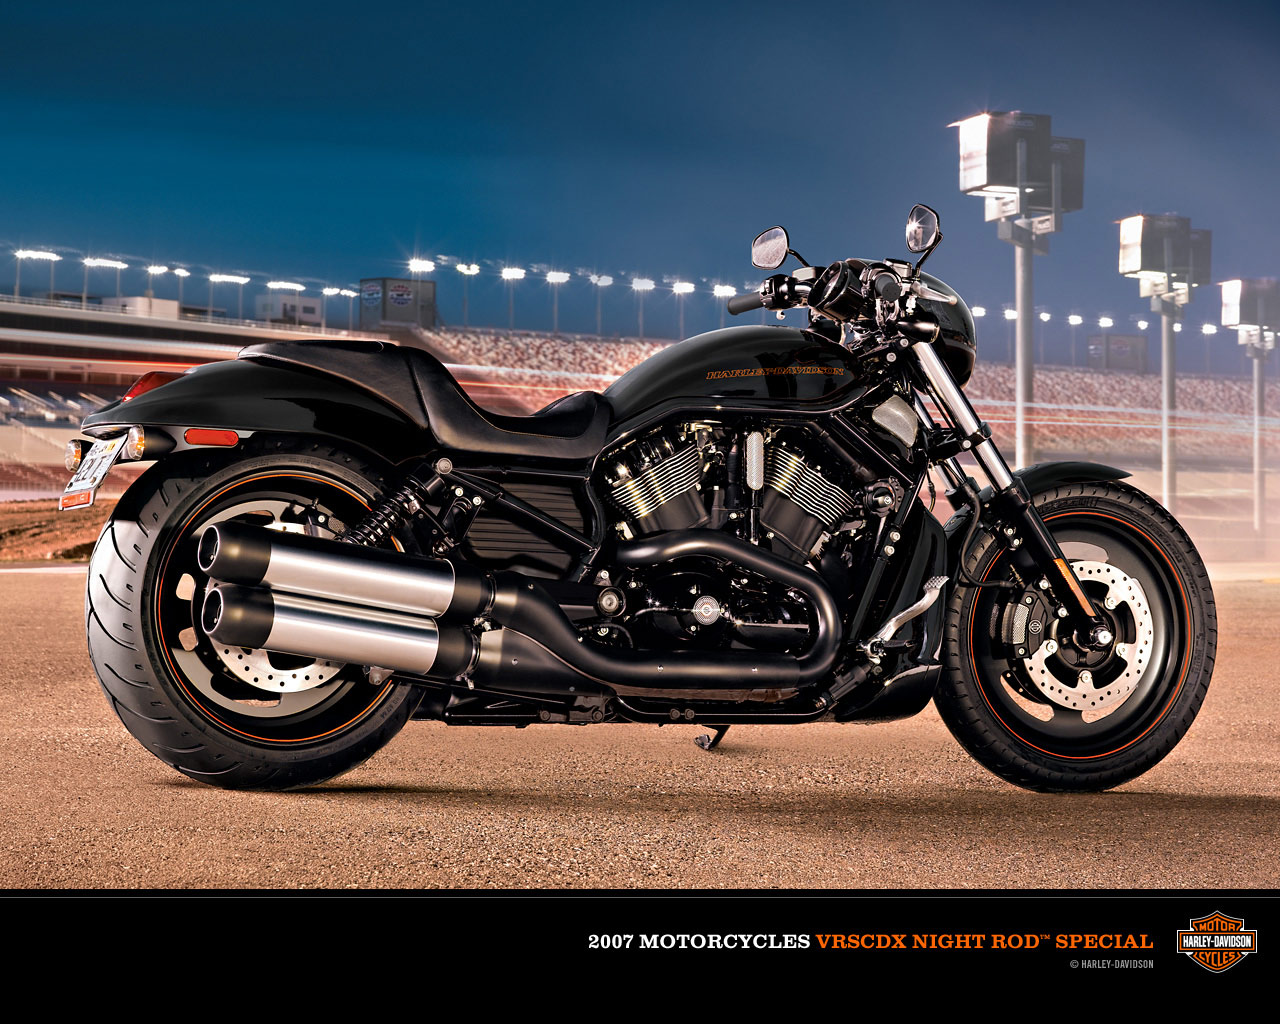 Fast Bikes Harley Davidson Dyna Motorcycle Re Wallpaper